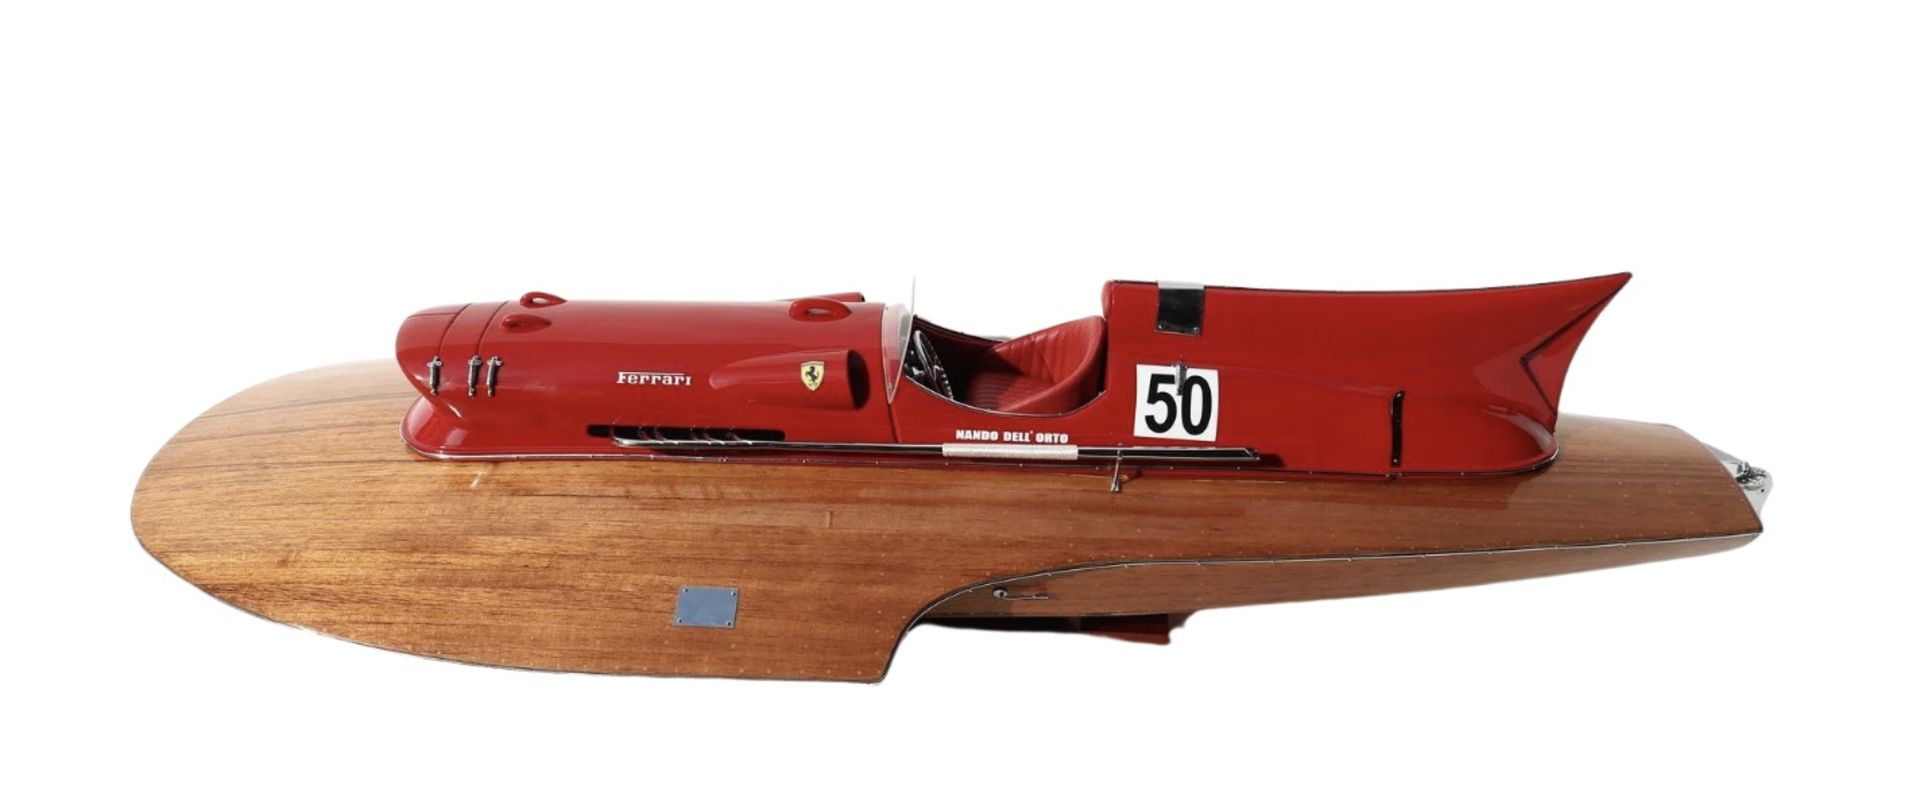 Ferrari Hydroplane "Arno XI" Wooden Scale Desk Model Display